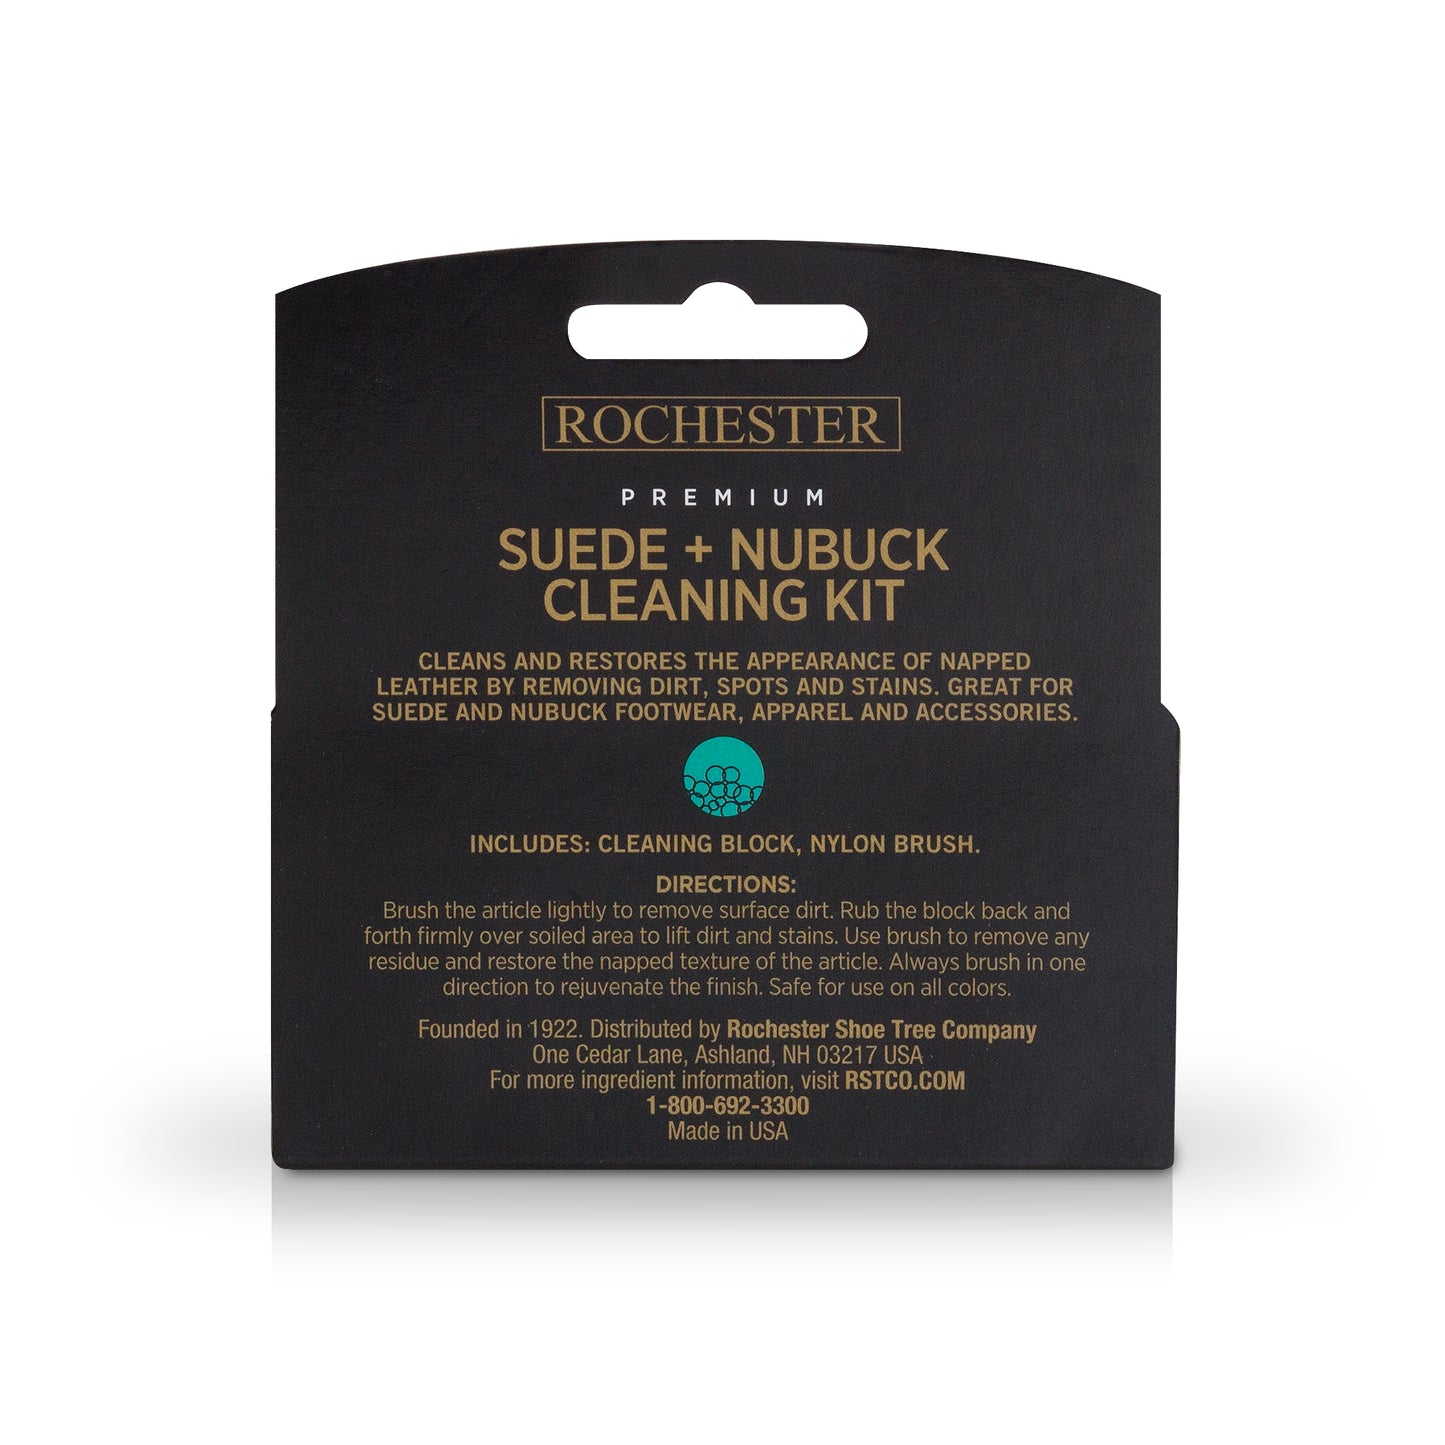 Rochester Suede + Nubuck Kit Box - 2 Piece